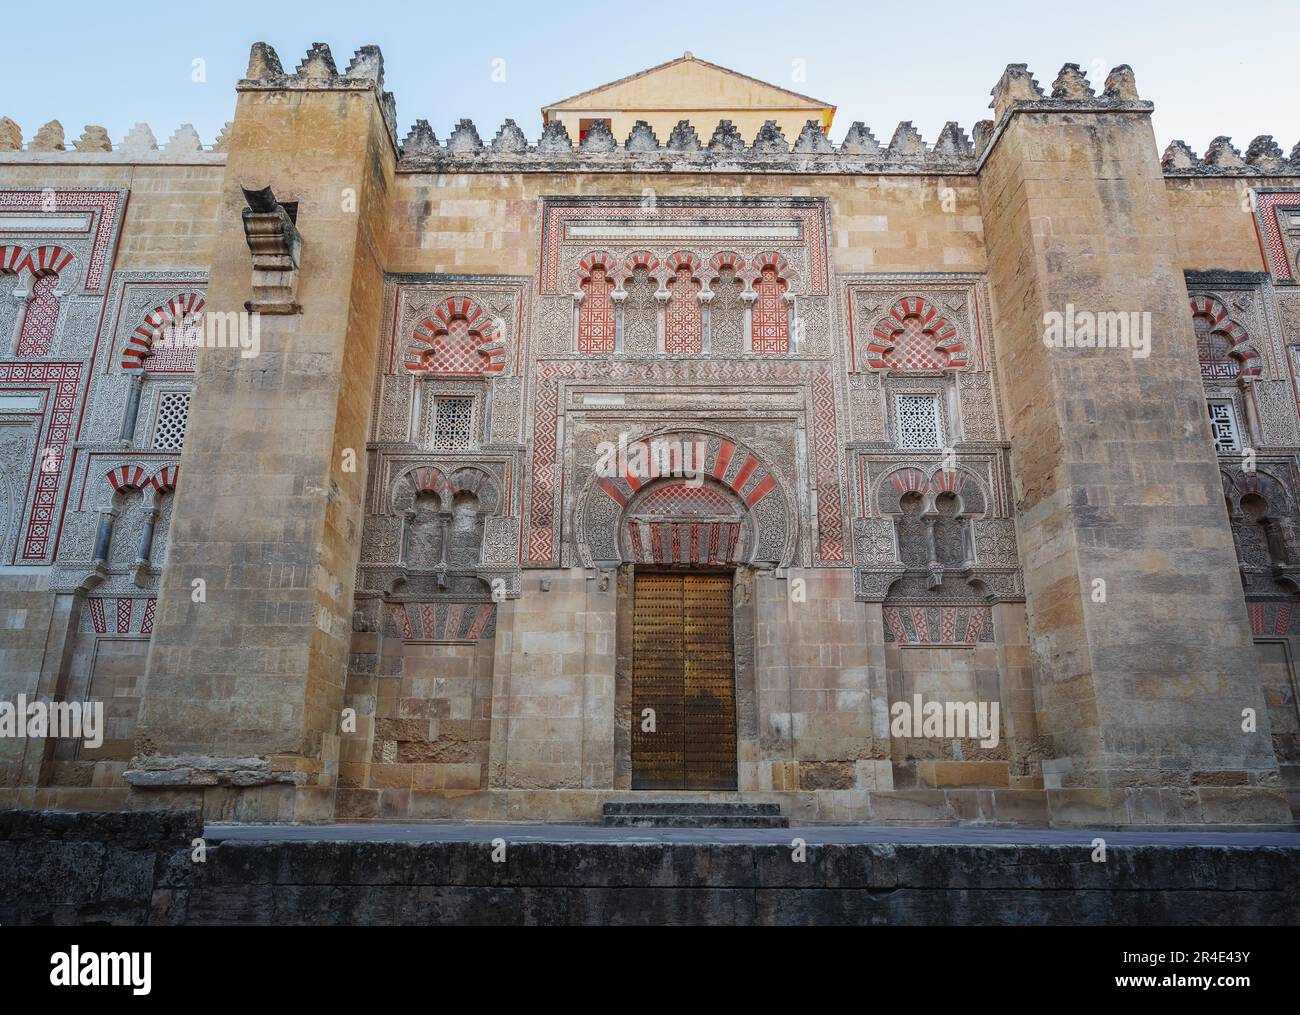 Concepcion Antigua-Tür in der Moschee – Kathedrale von Cordoba – Cordoba, Andalusien, Spanien Stockfoto